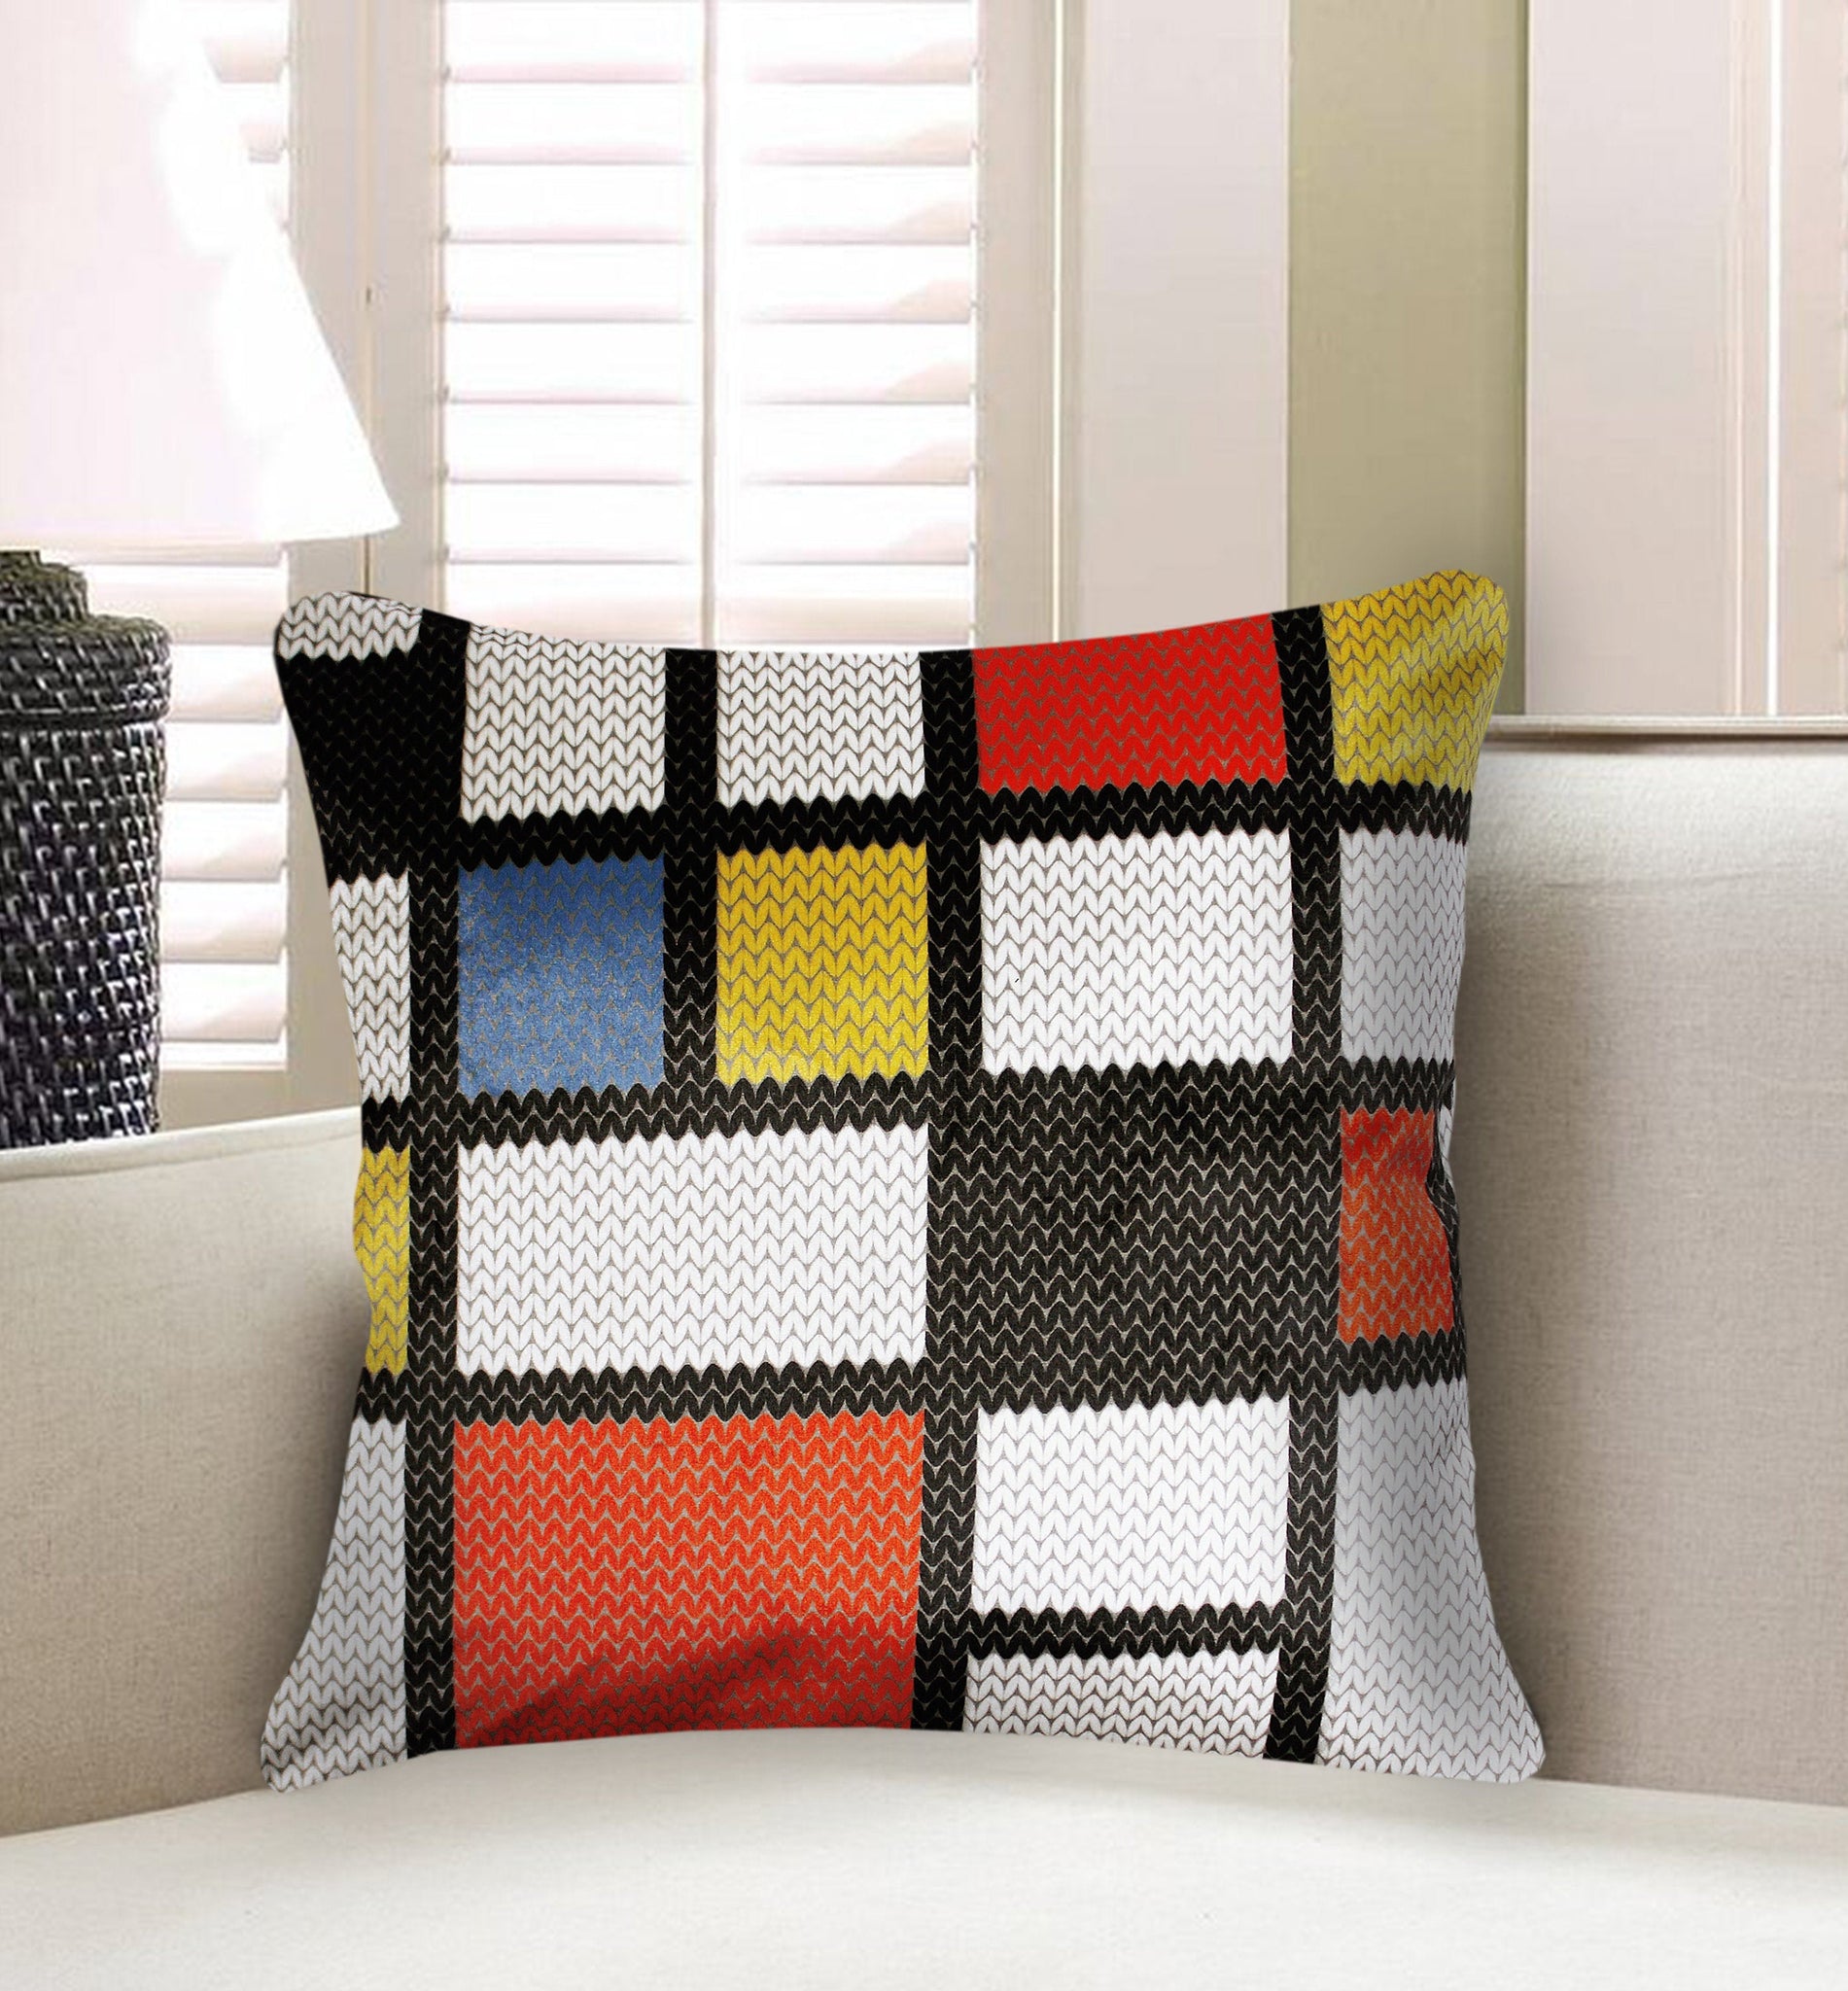 Velvet Cushion Cover Mondrian Geometric Decorative Pillowcase Iconic Paint Art Decor Throw Pillow for Sofa Chair Bedroom Living Room Multi Color 45x45cm (18x18 In)